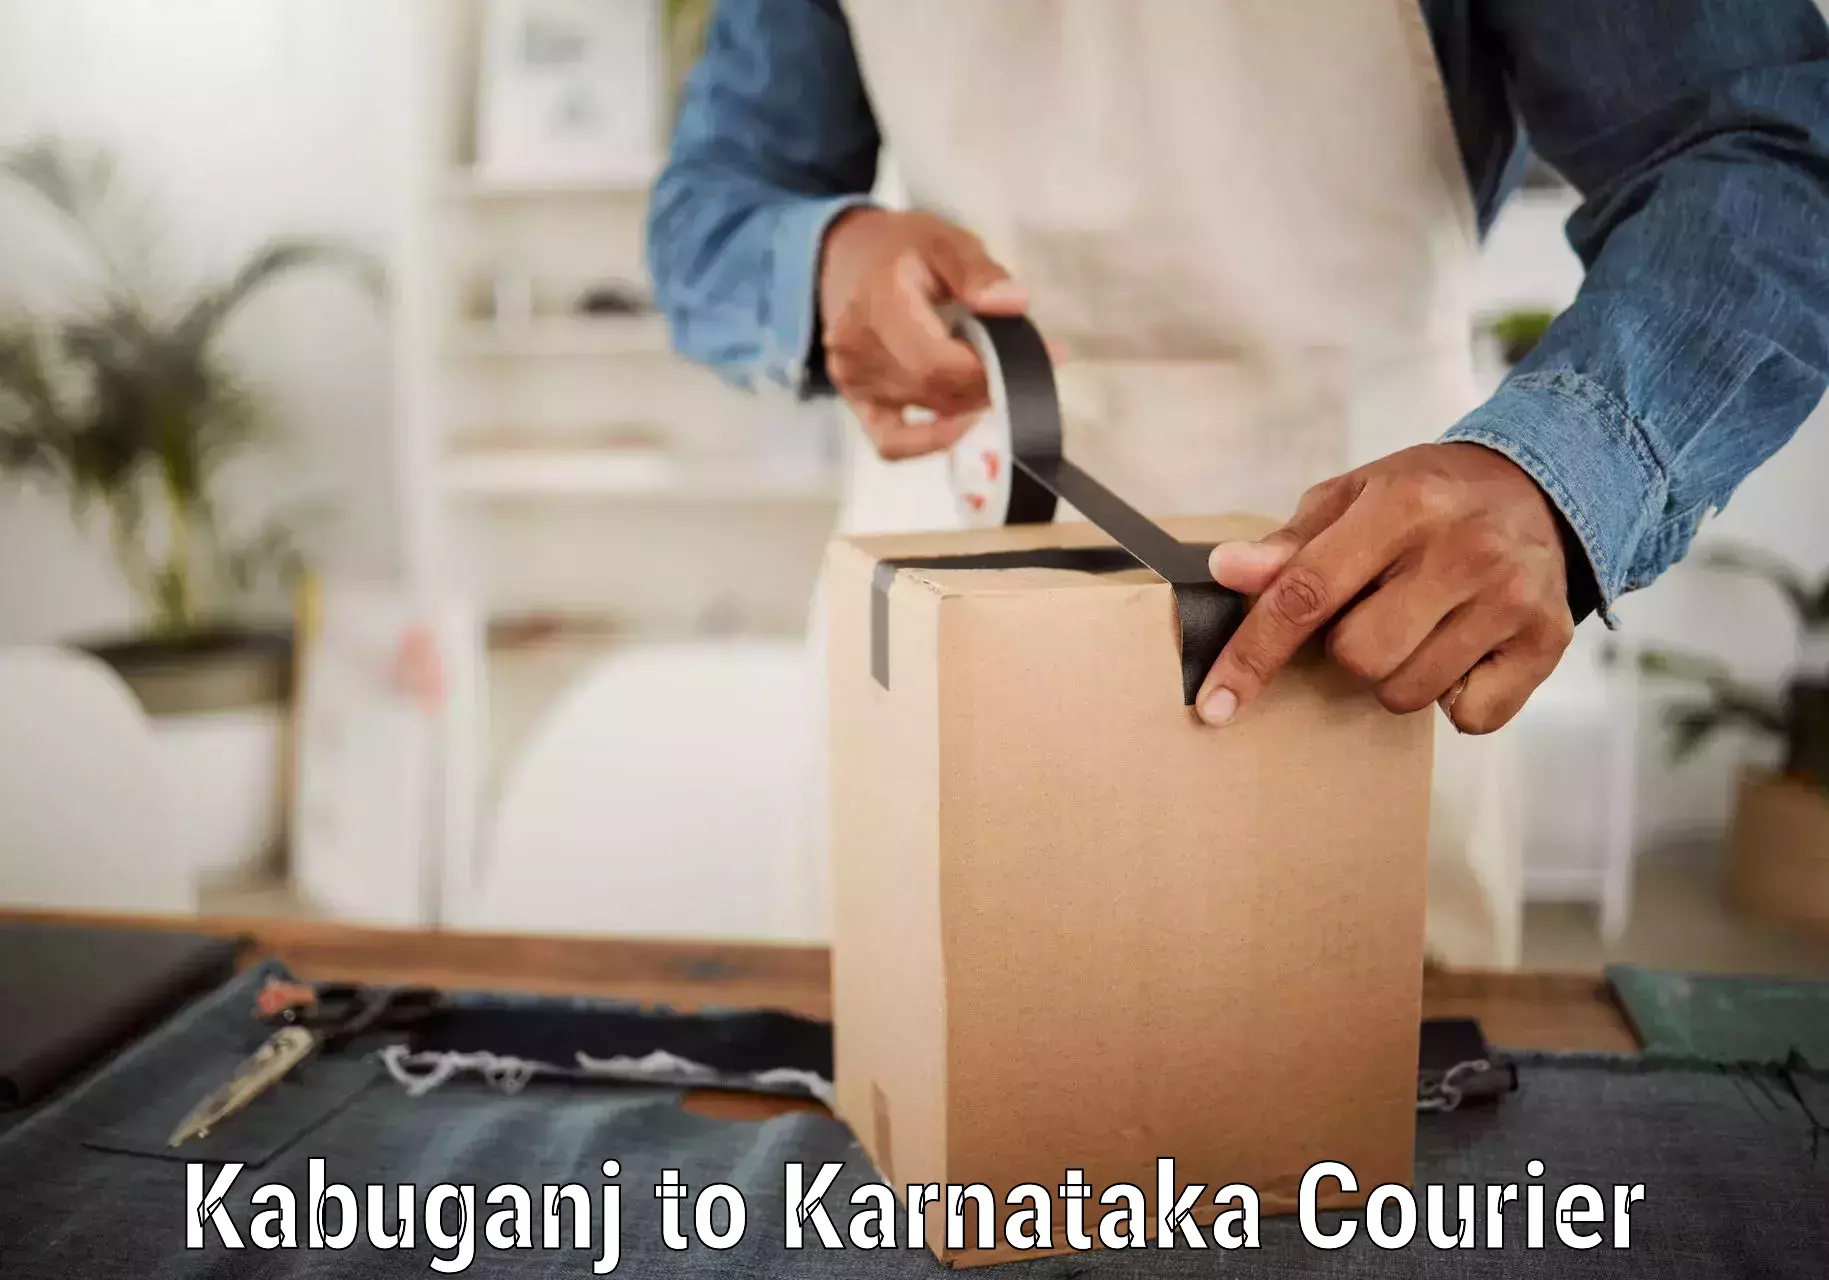 International courier networks Kabuganj to Karnataka